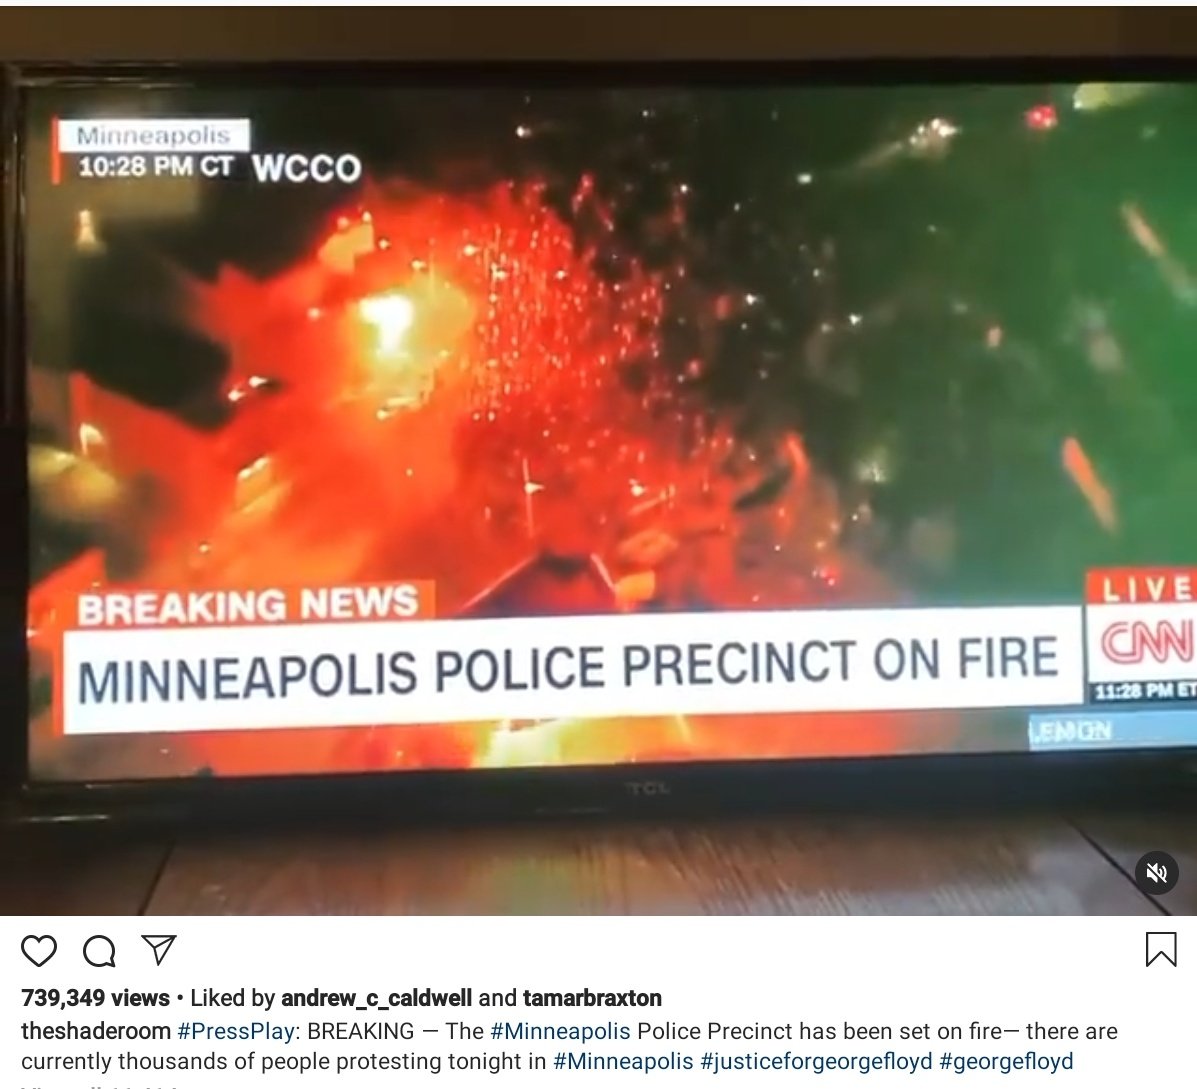 RT @Resa_Resa23: They done set the entire 3rd precinct on fire....Minneapolis  is gangsta jesus https://t.co/7xyzRnRGXc